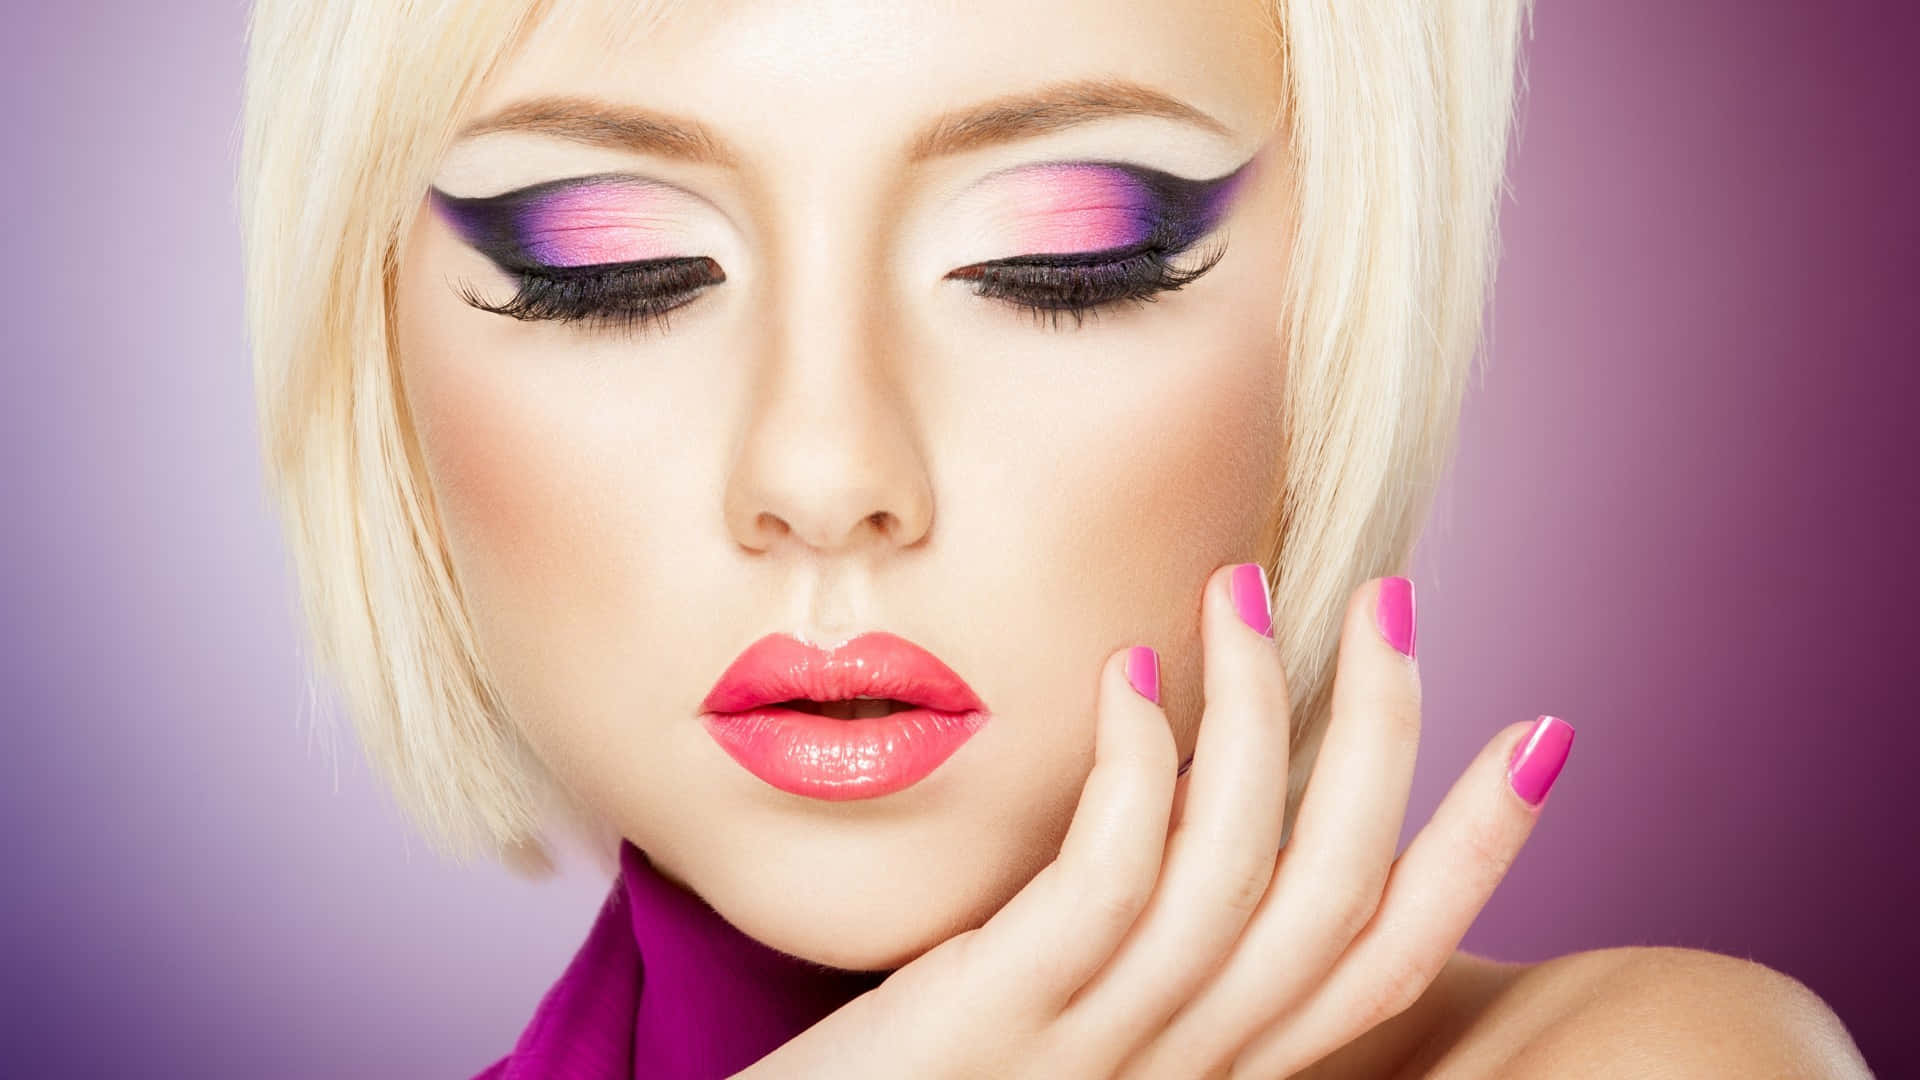 Glamorous Pink Makeup Look with Sparkling Eyes Wallpaper